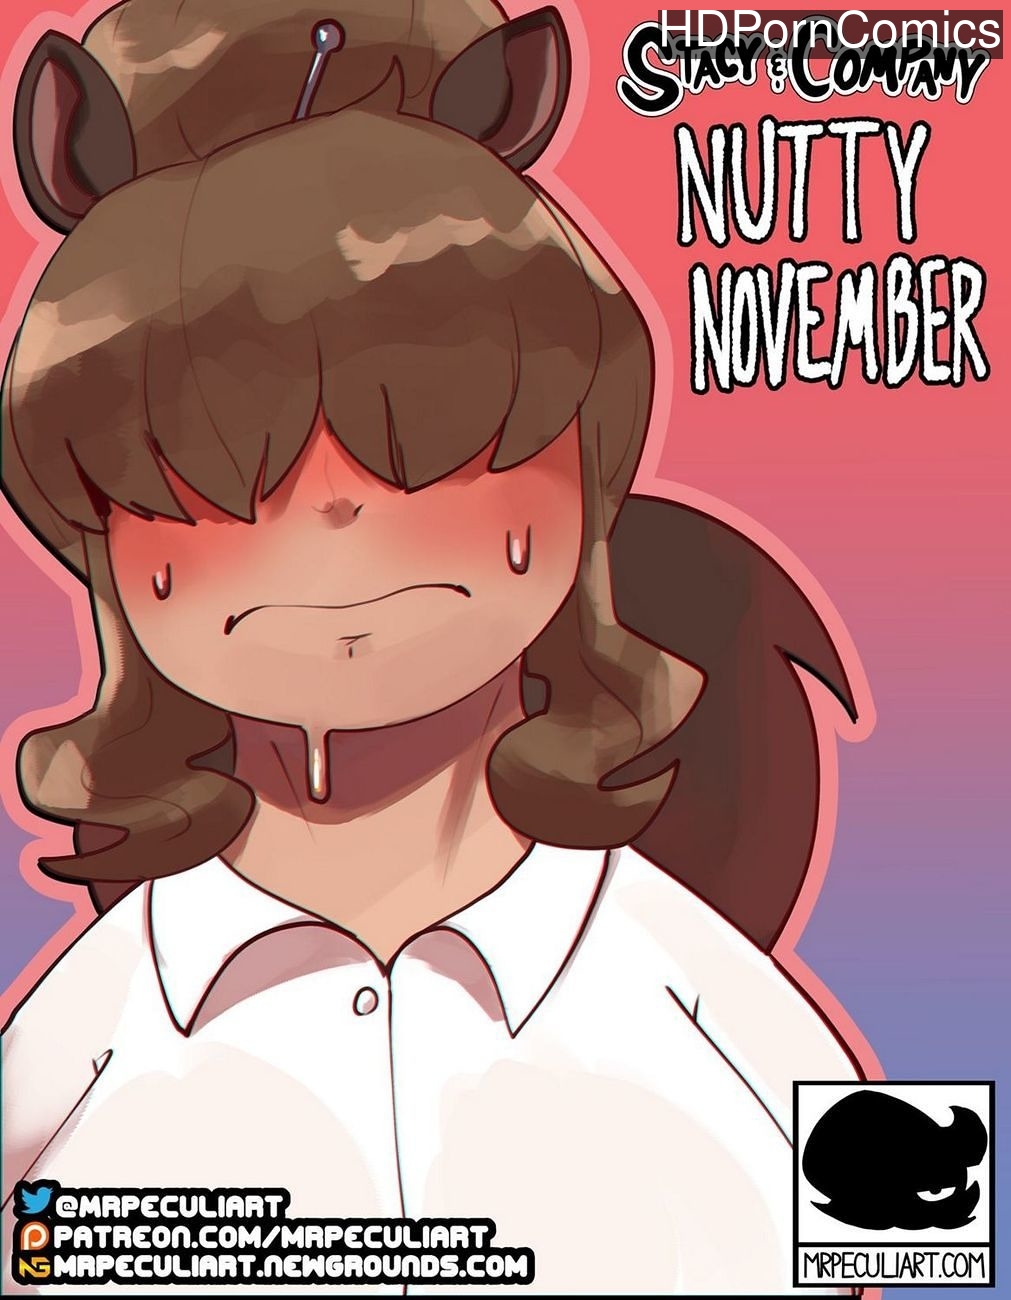 Stacy & Company — Nutty November_00.jpg